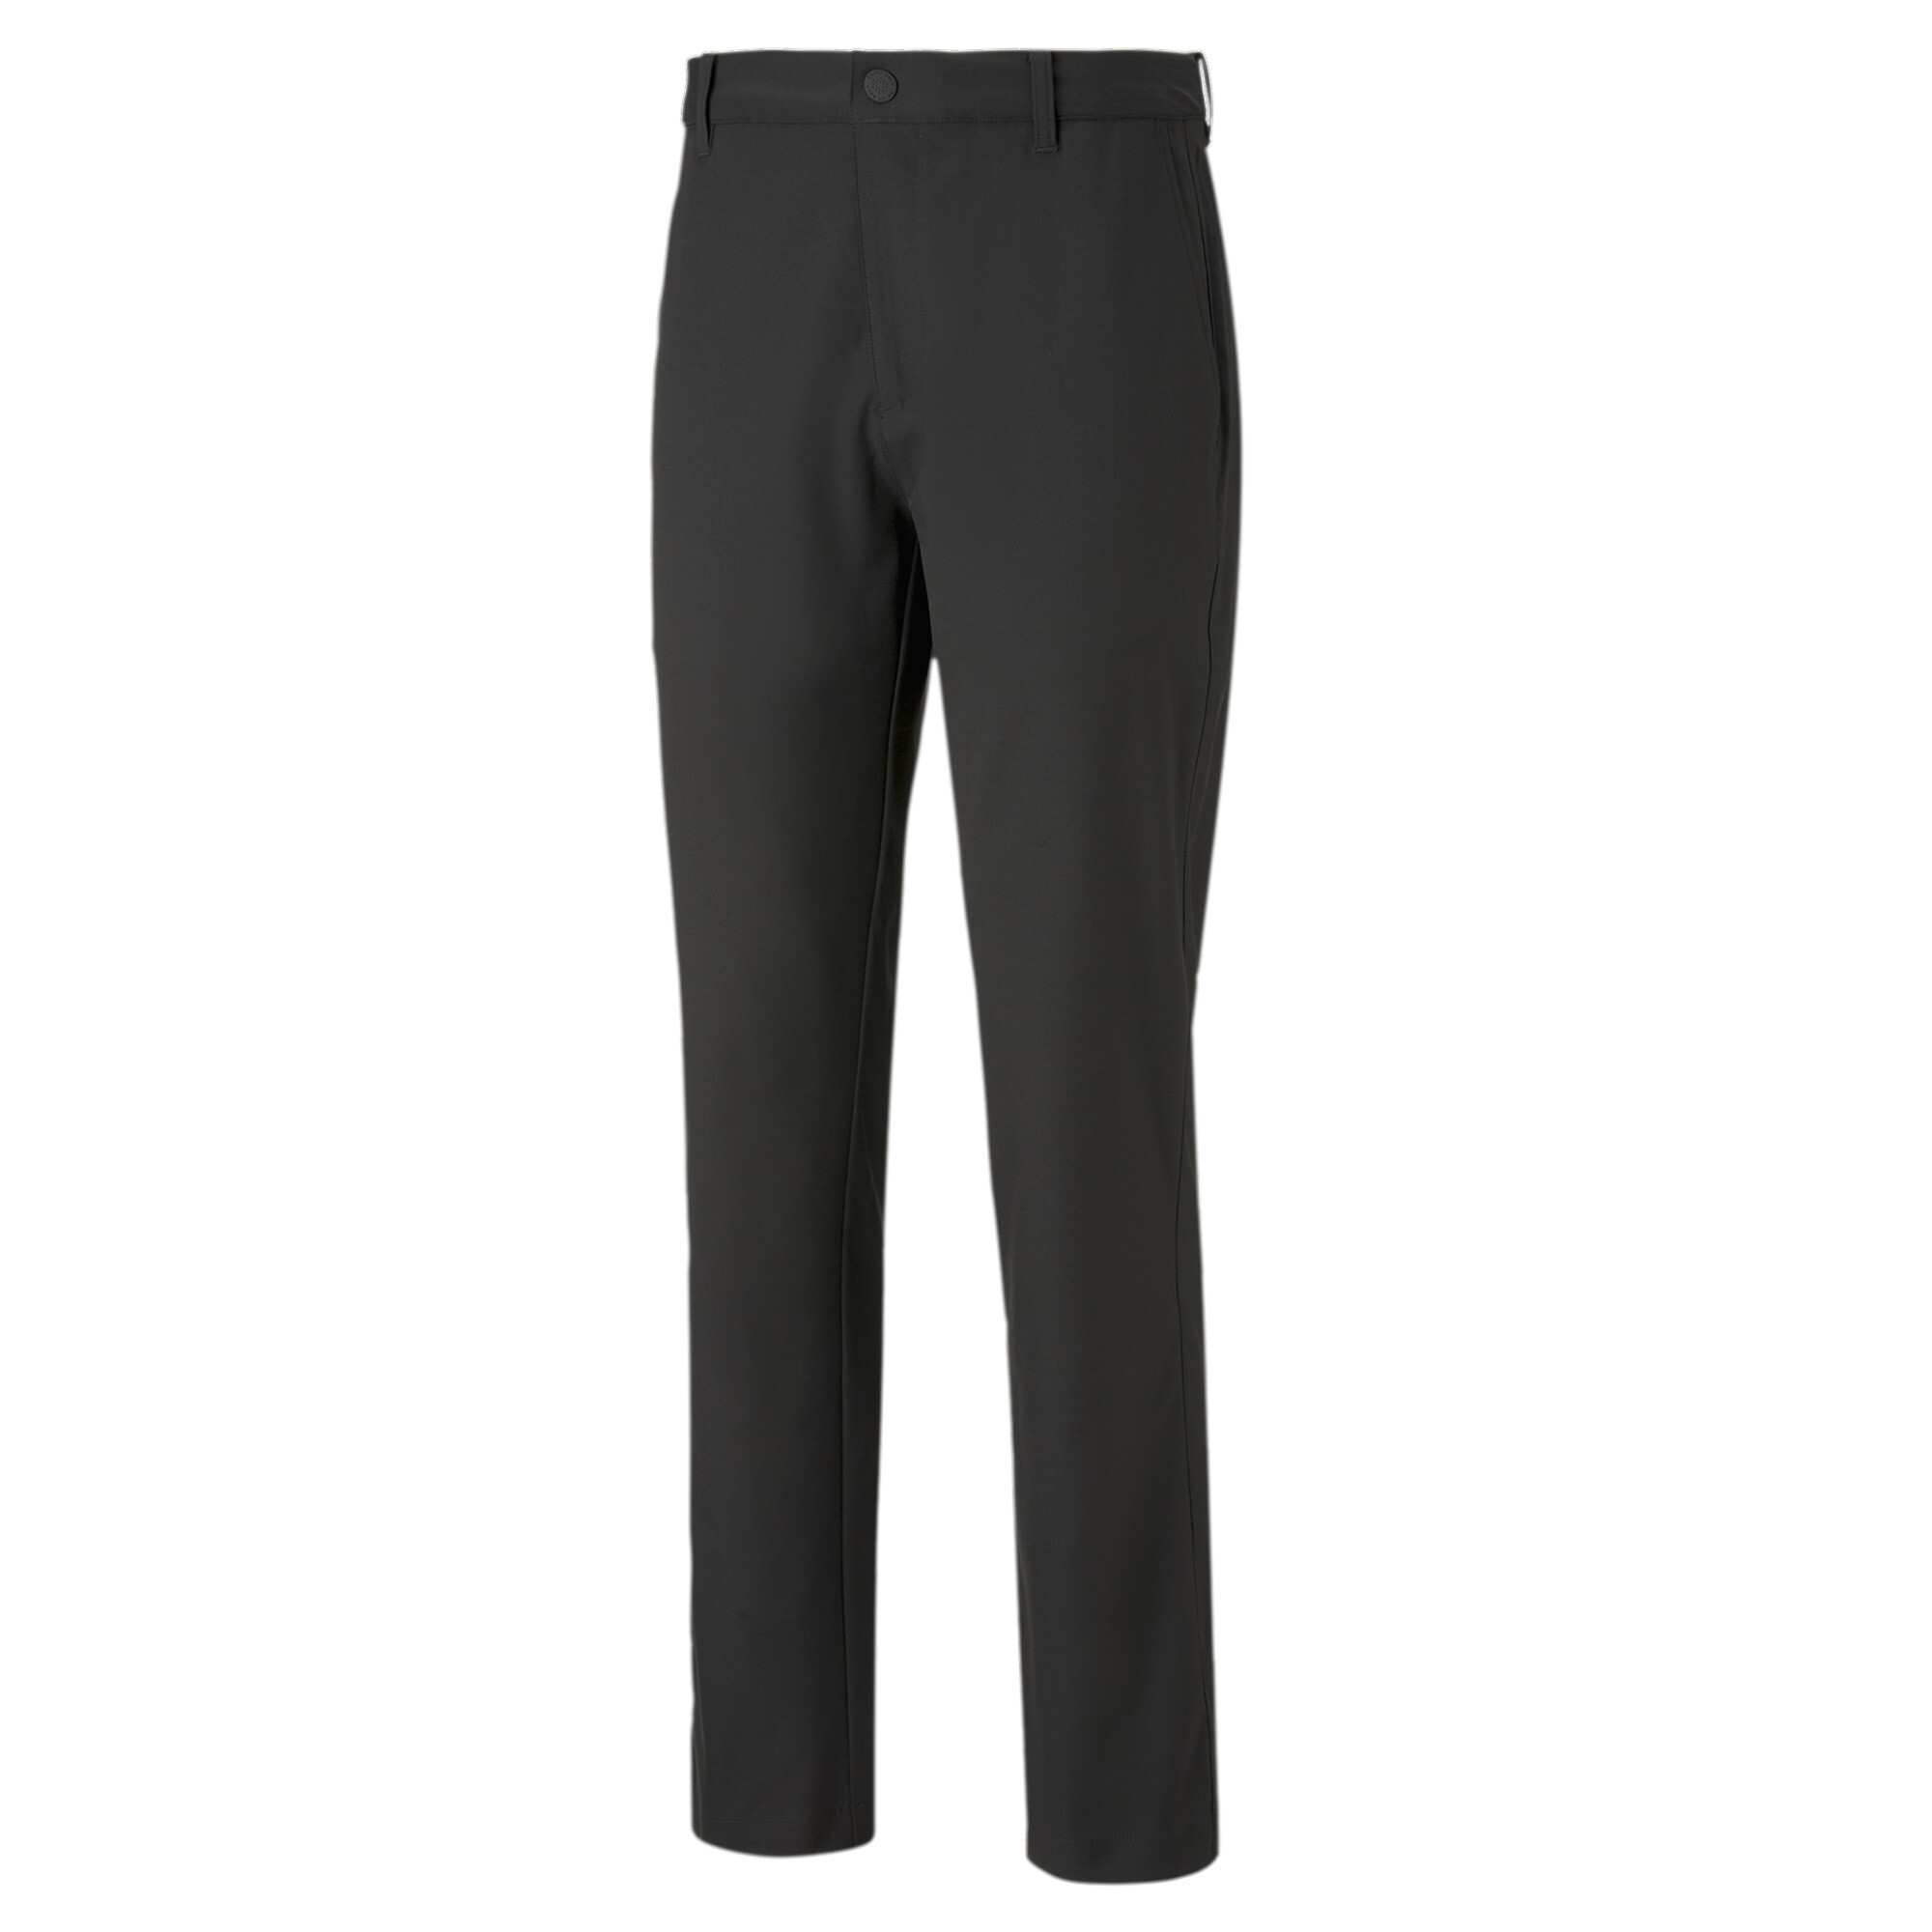 Men's Puma Dealer Golf Pants, Black, Size 32/30, Clothing